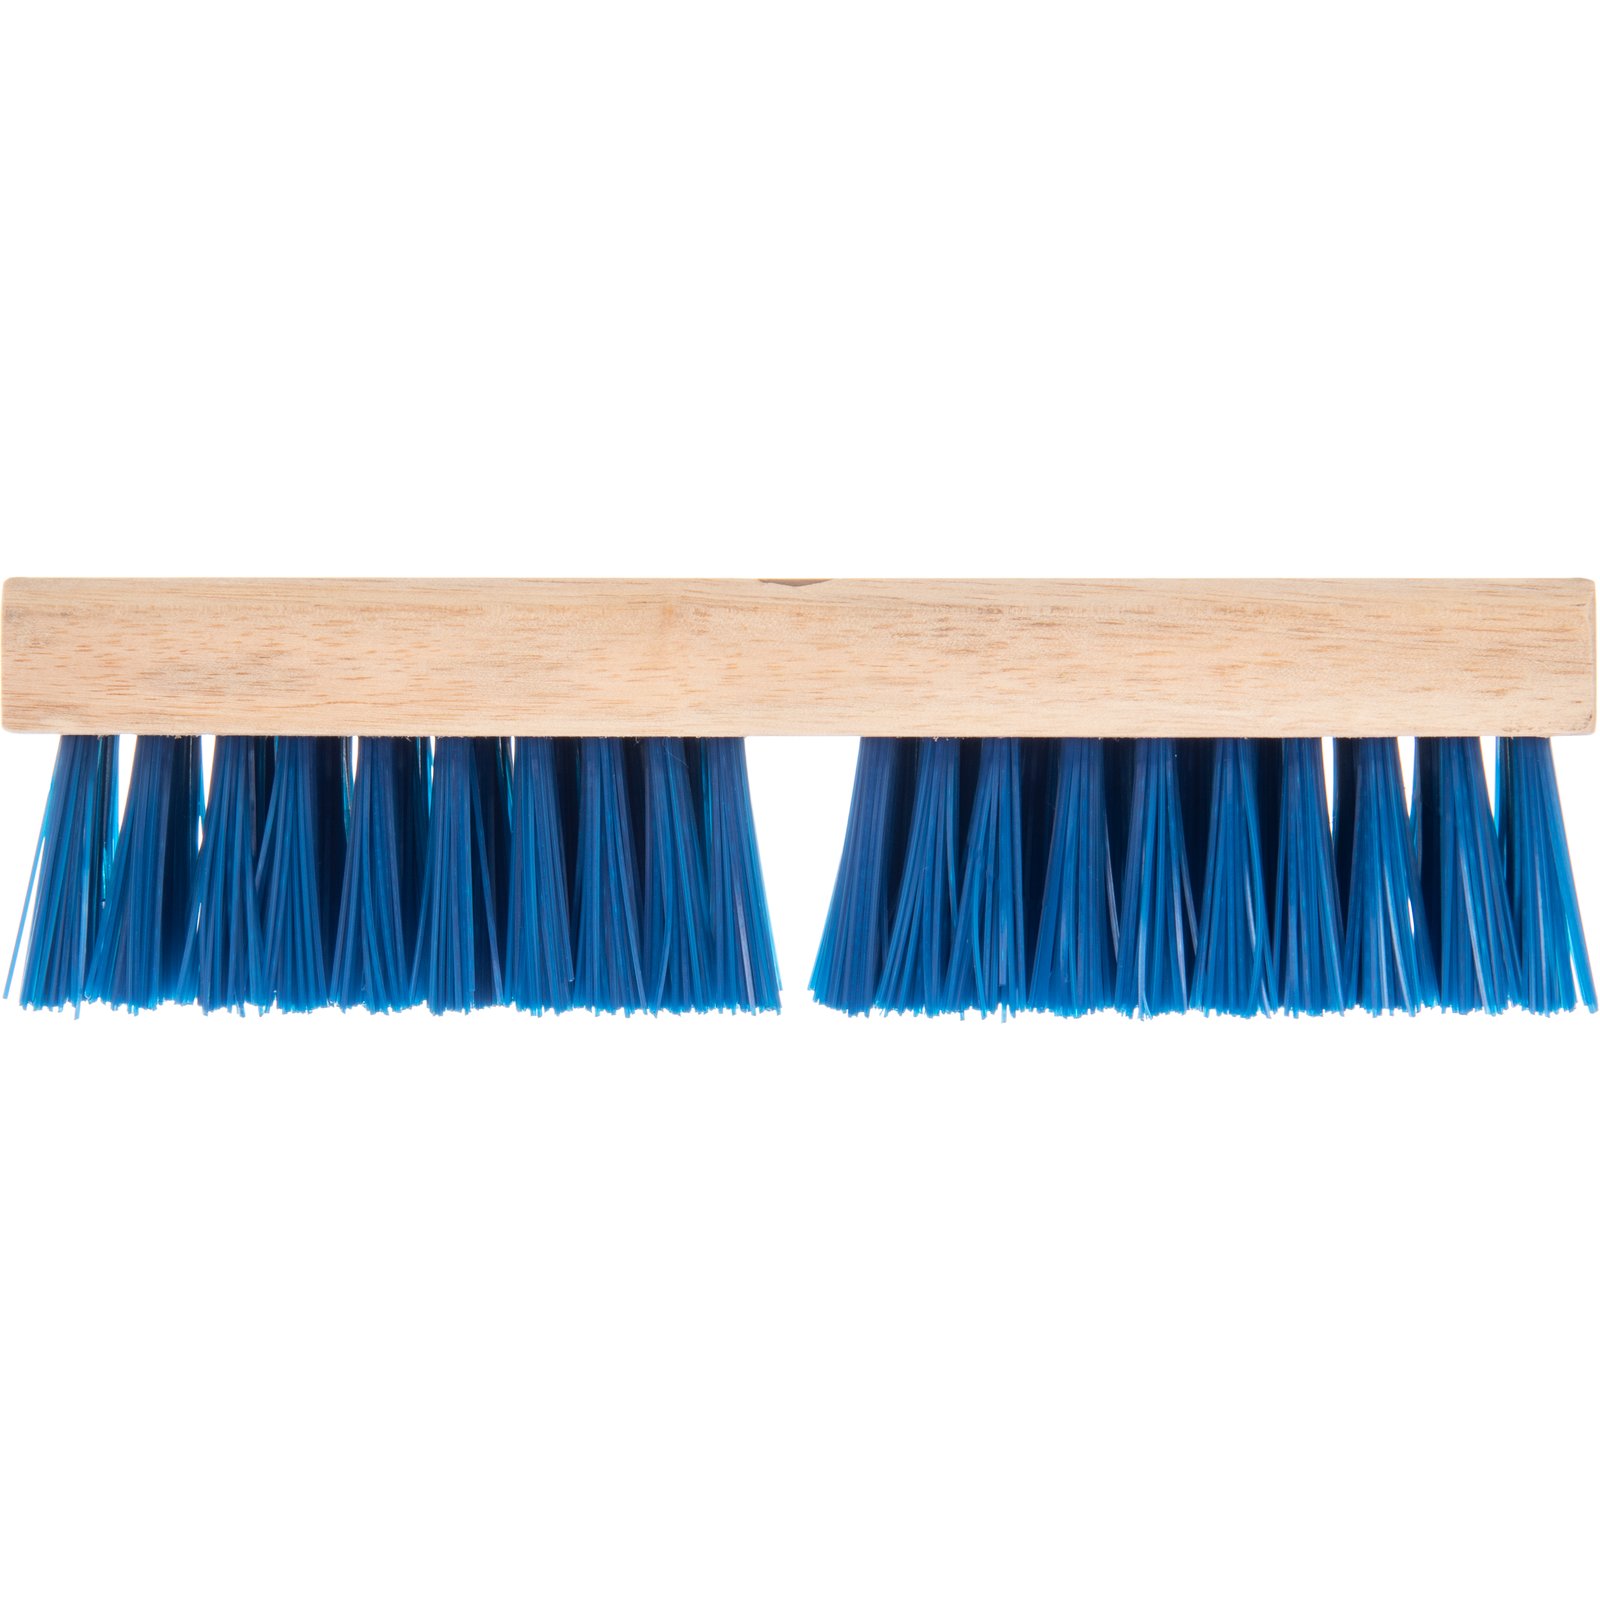 SWOPT 10-in Nylon Stiff Deck Brush in the Deck Brushes department at